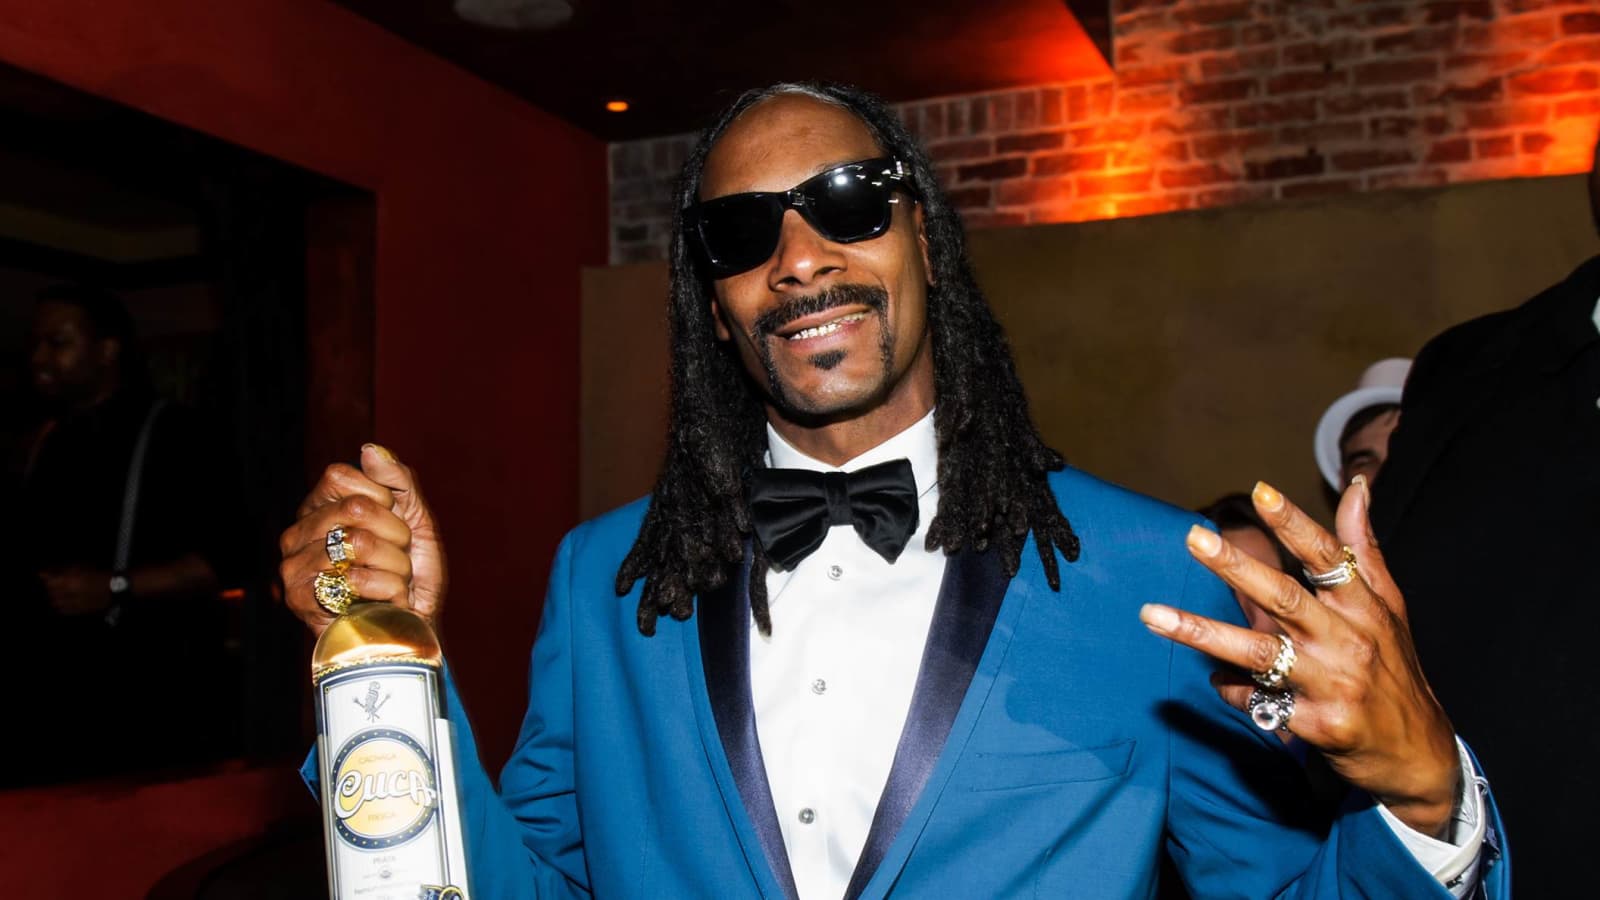 Snoop Dogg's bet on an obscure Brazilian liquor